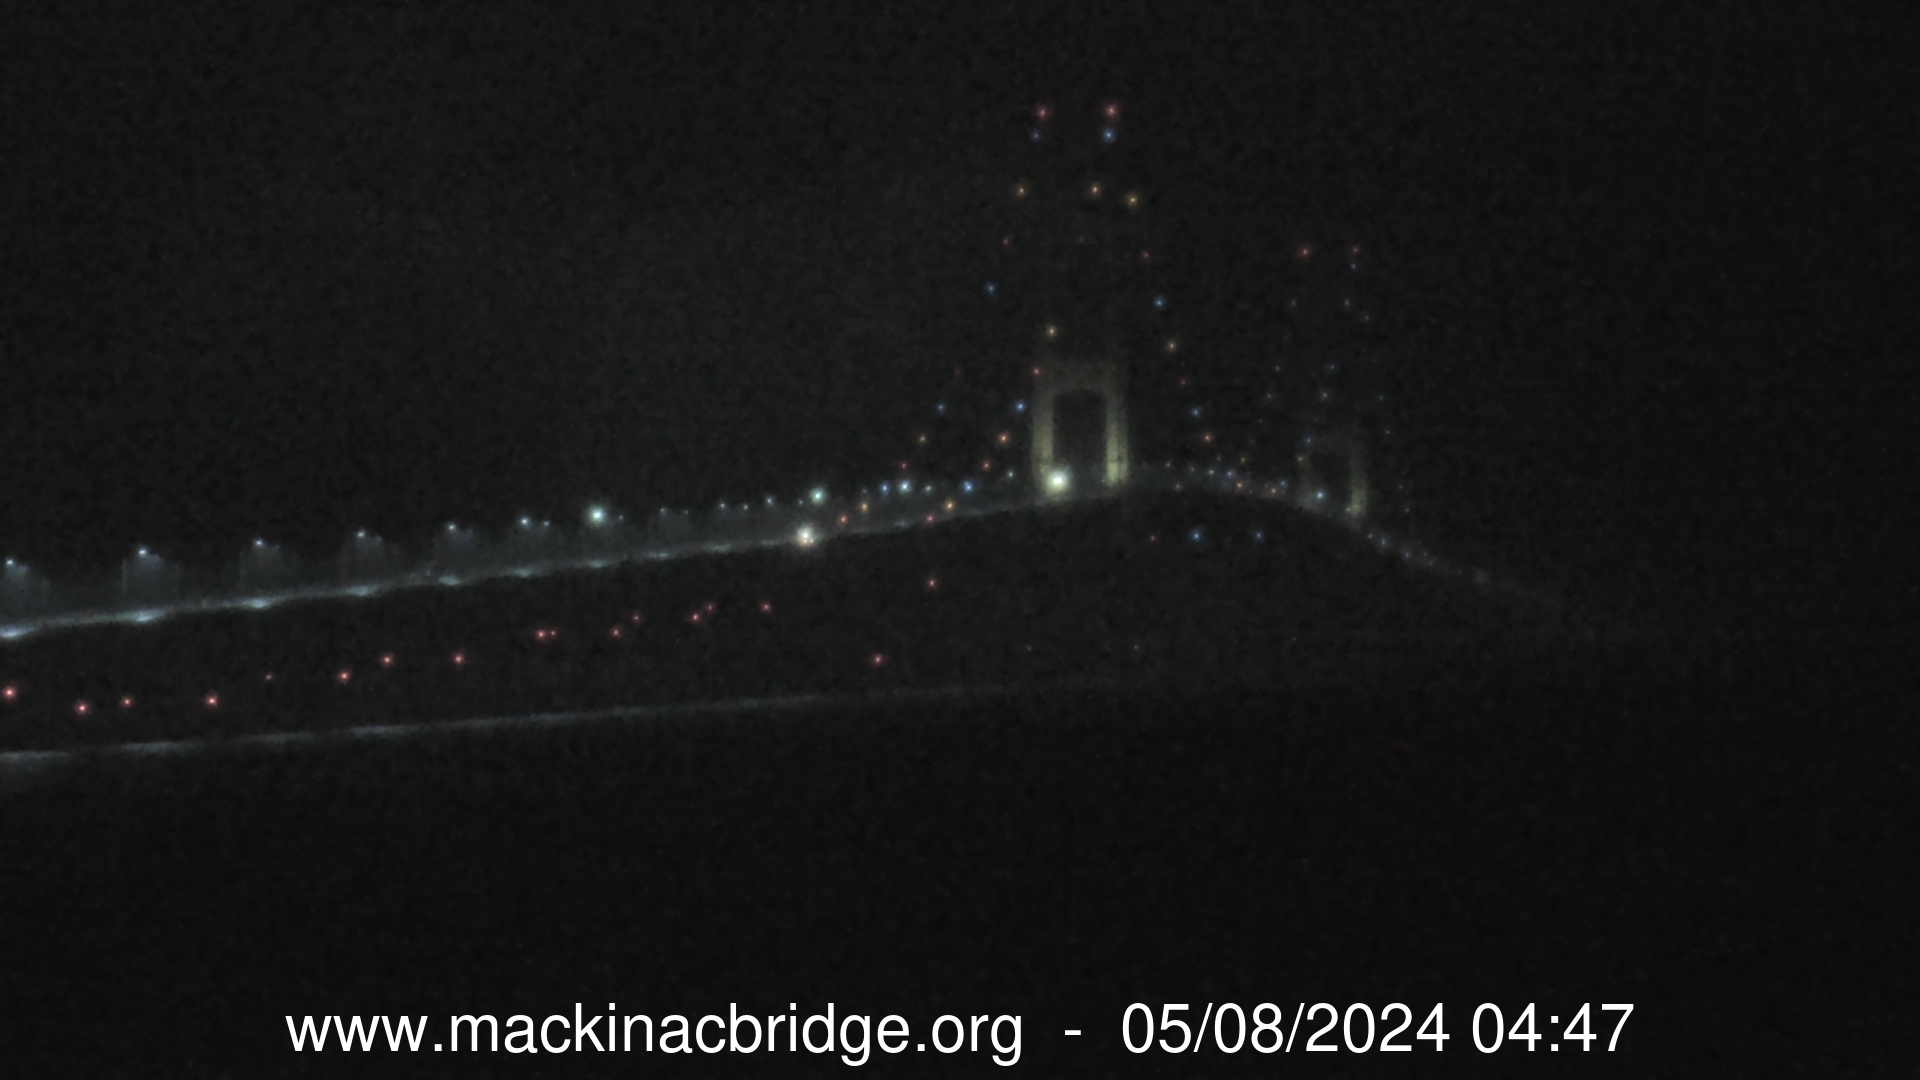 USA Mackinac Bridge Arch live camera